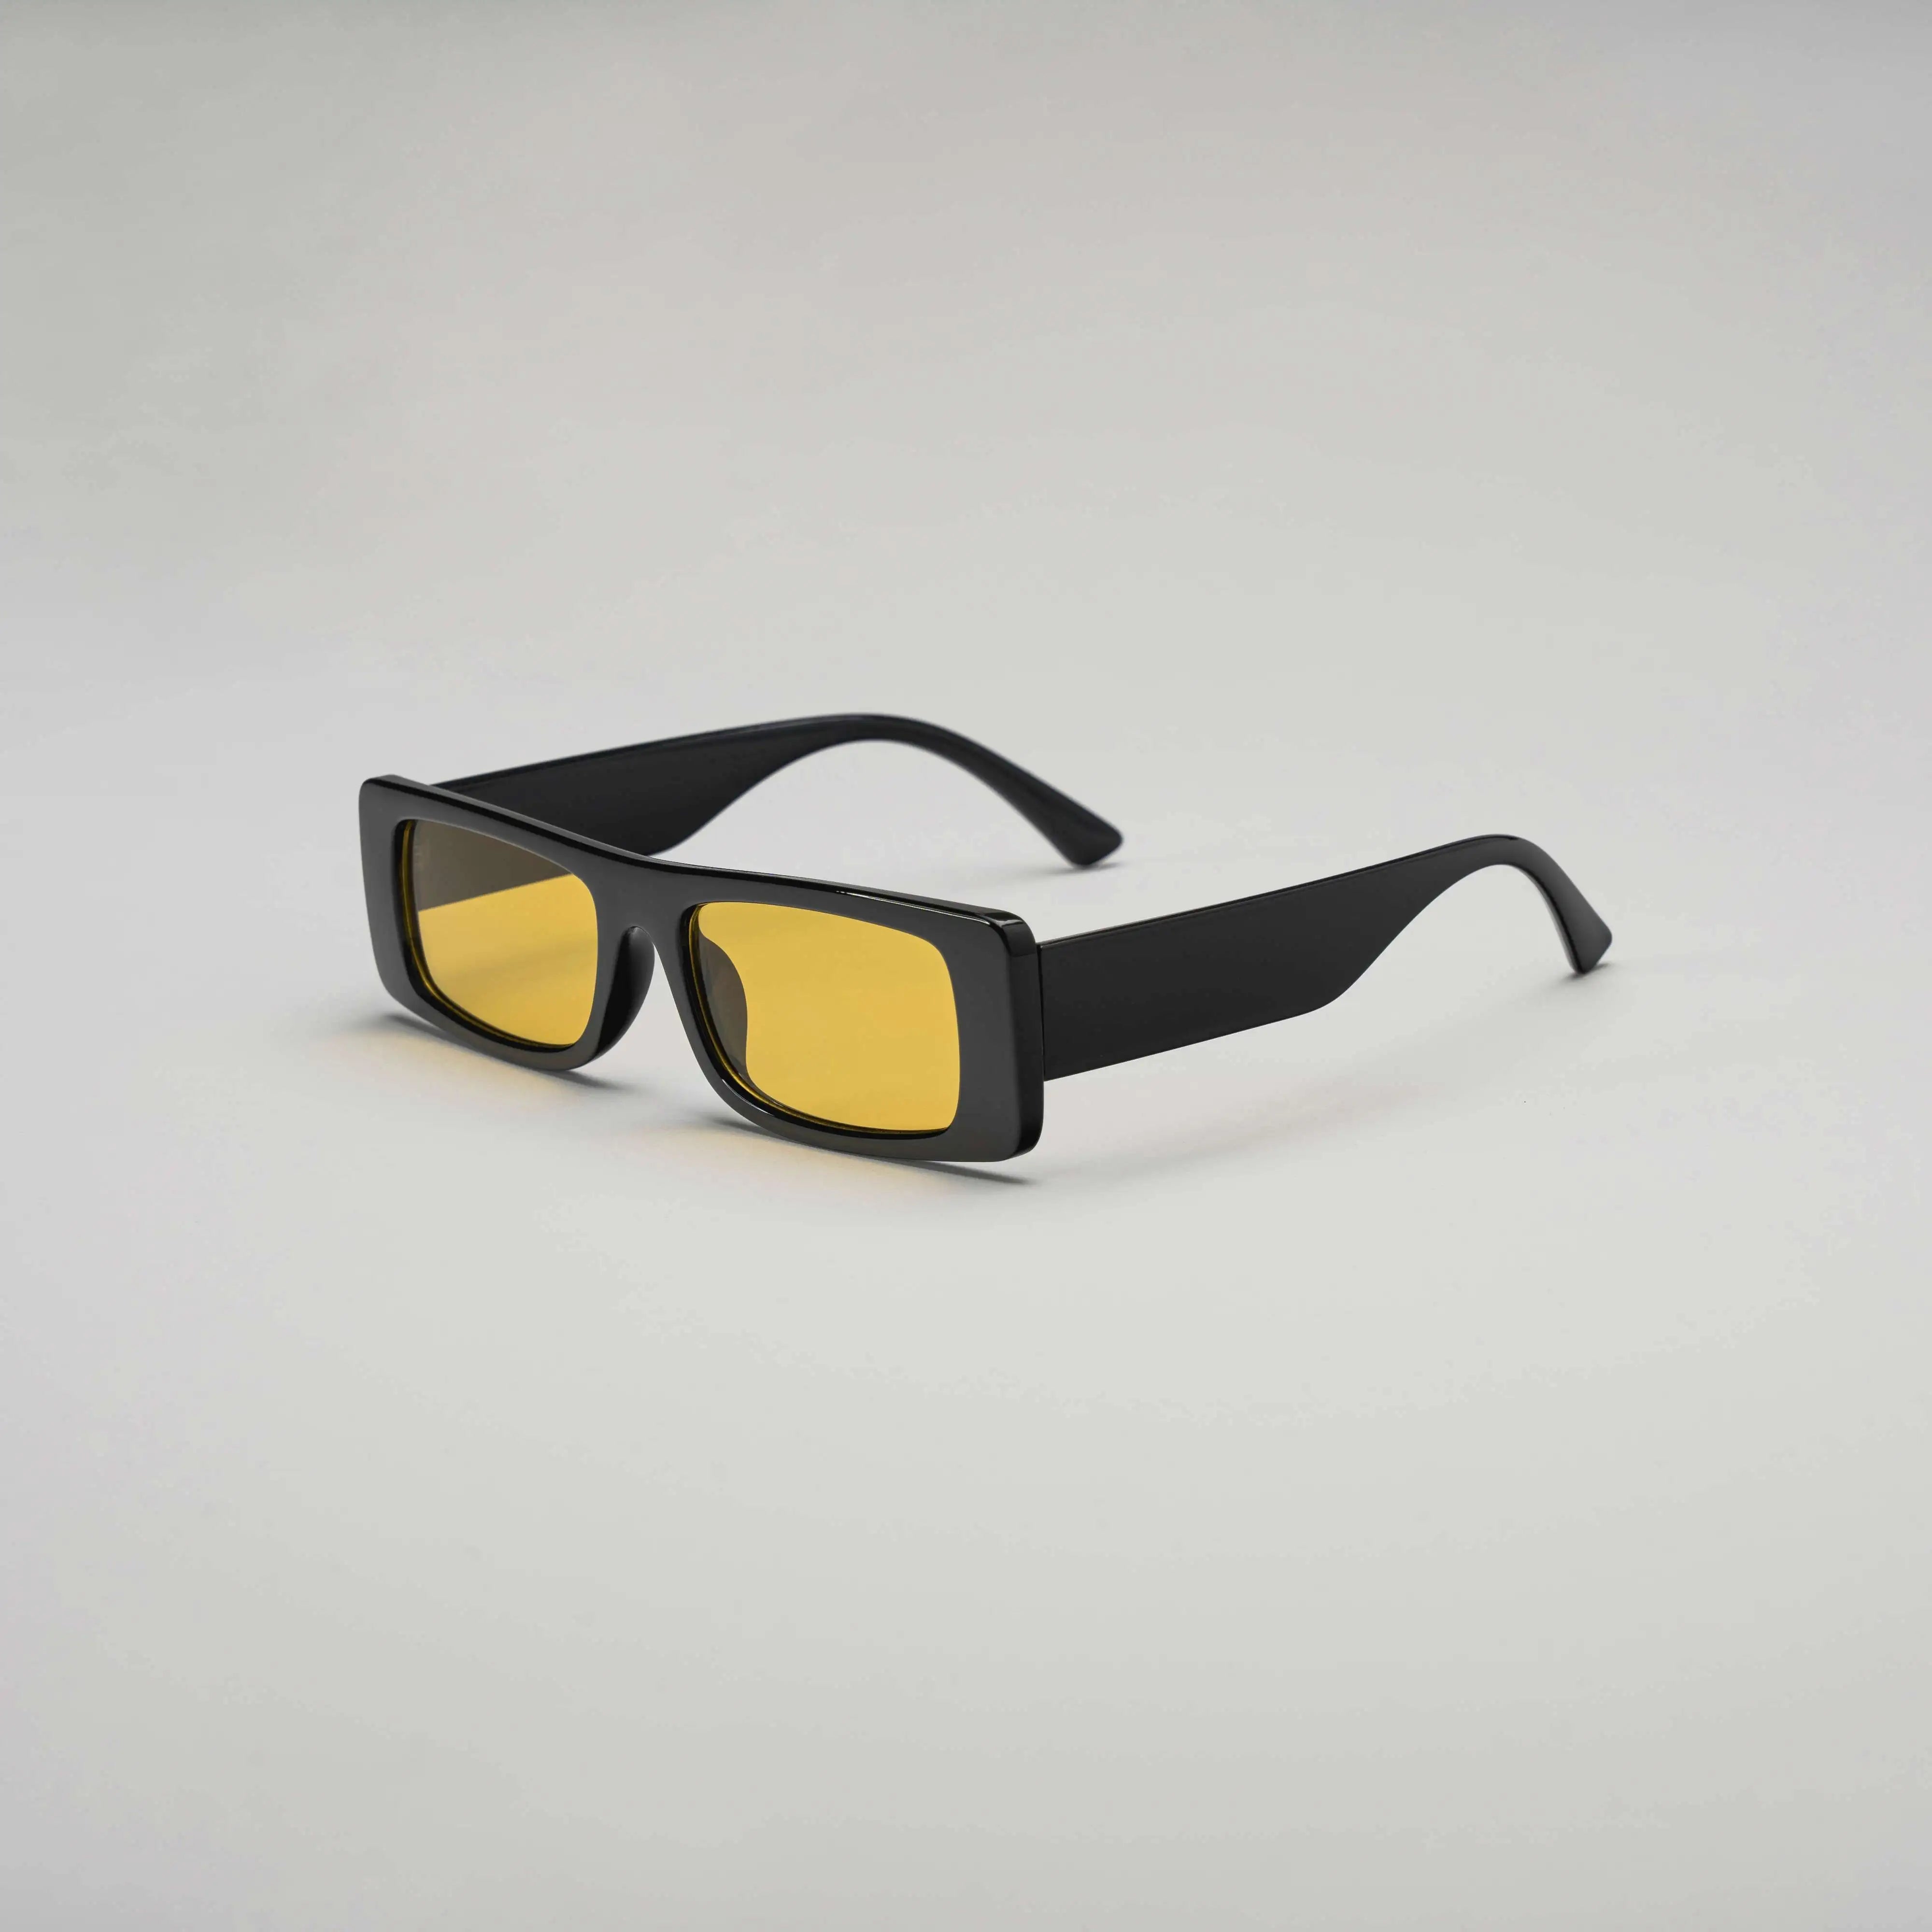 'Sarah Story' Retro Sunglasses in Black & Yellow